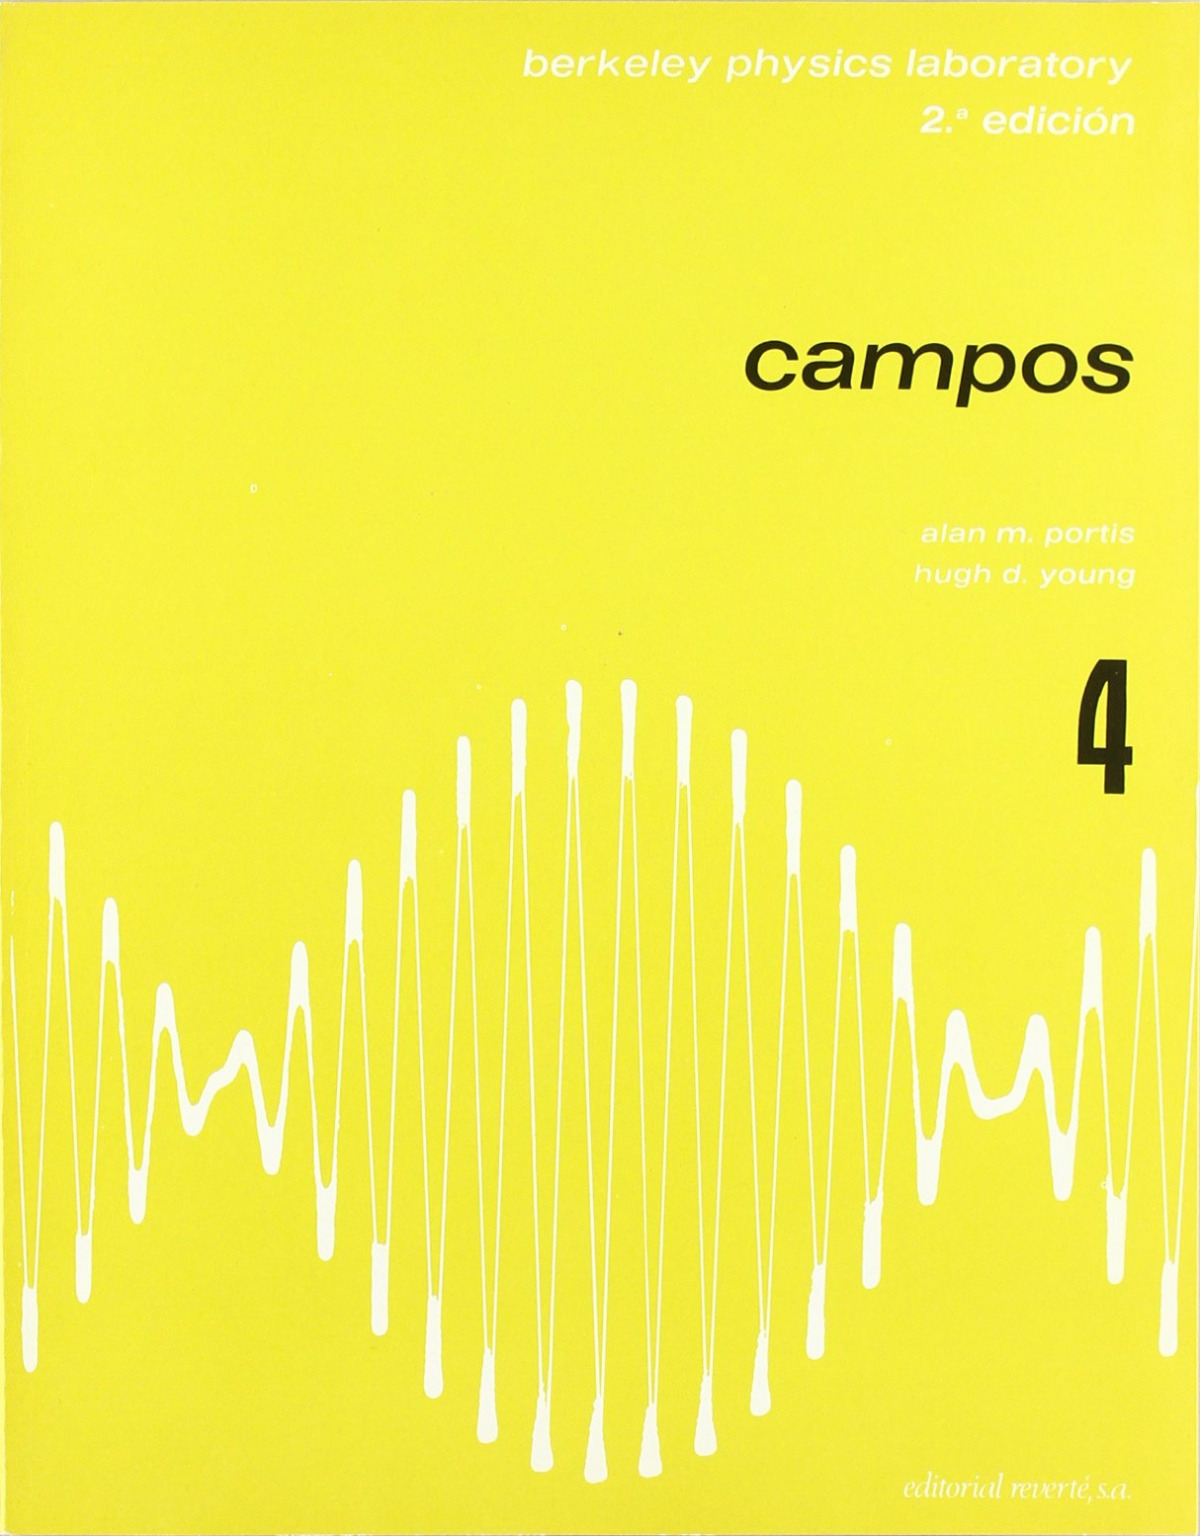 Campos - B.P.C. (Berkeley Physics Course)